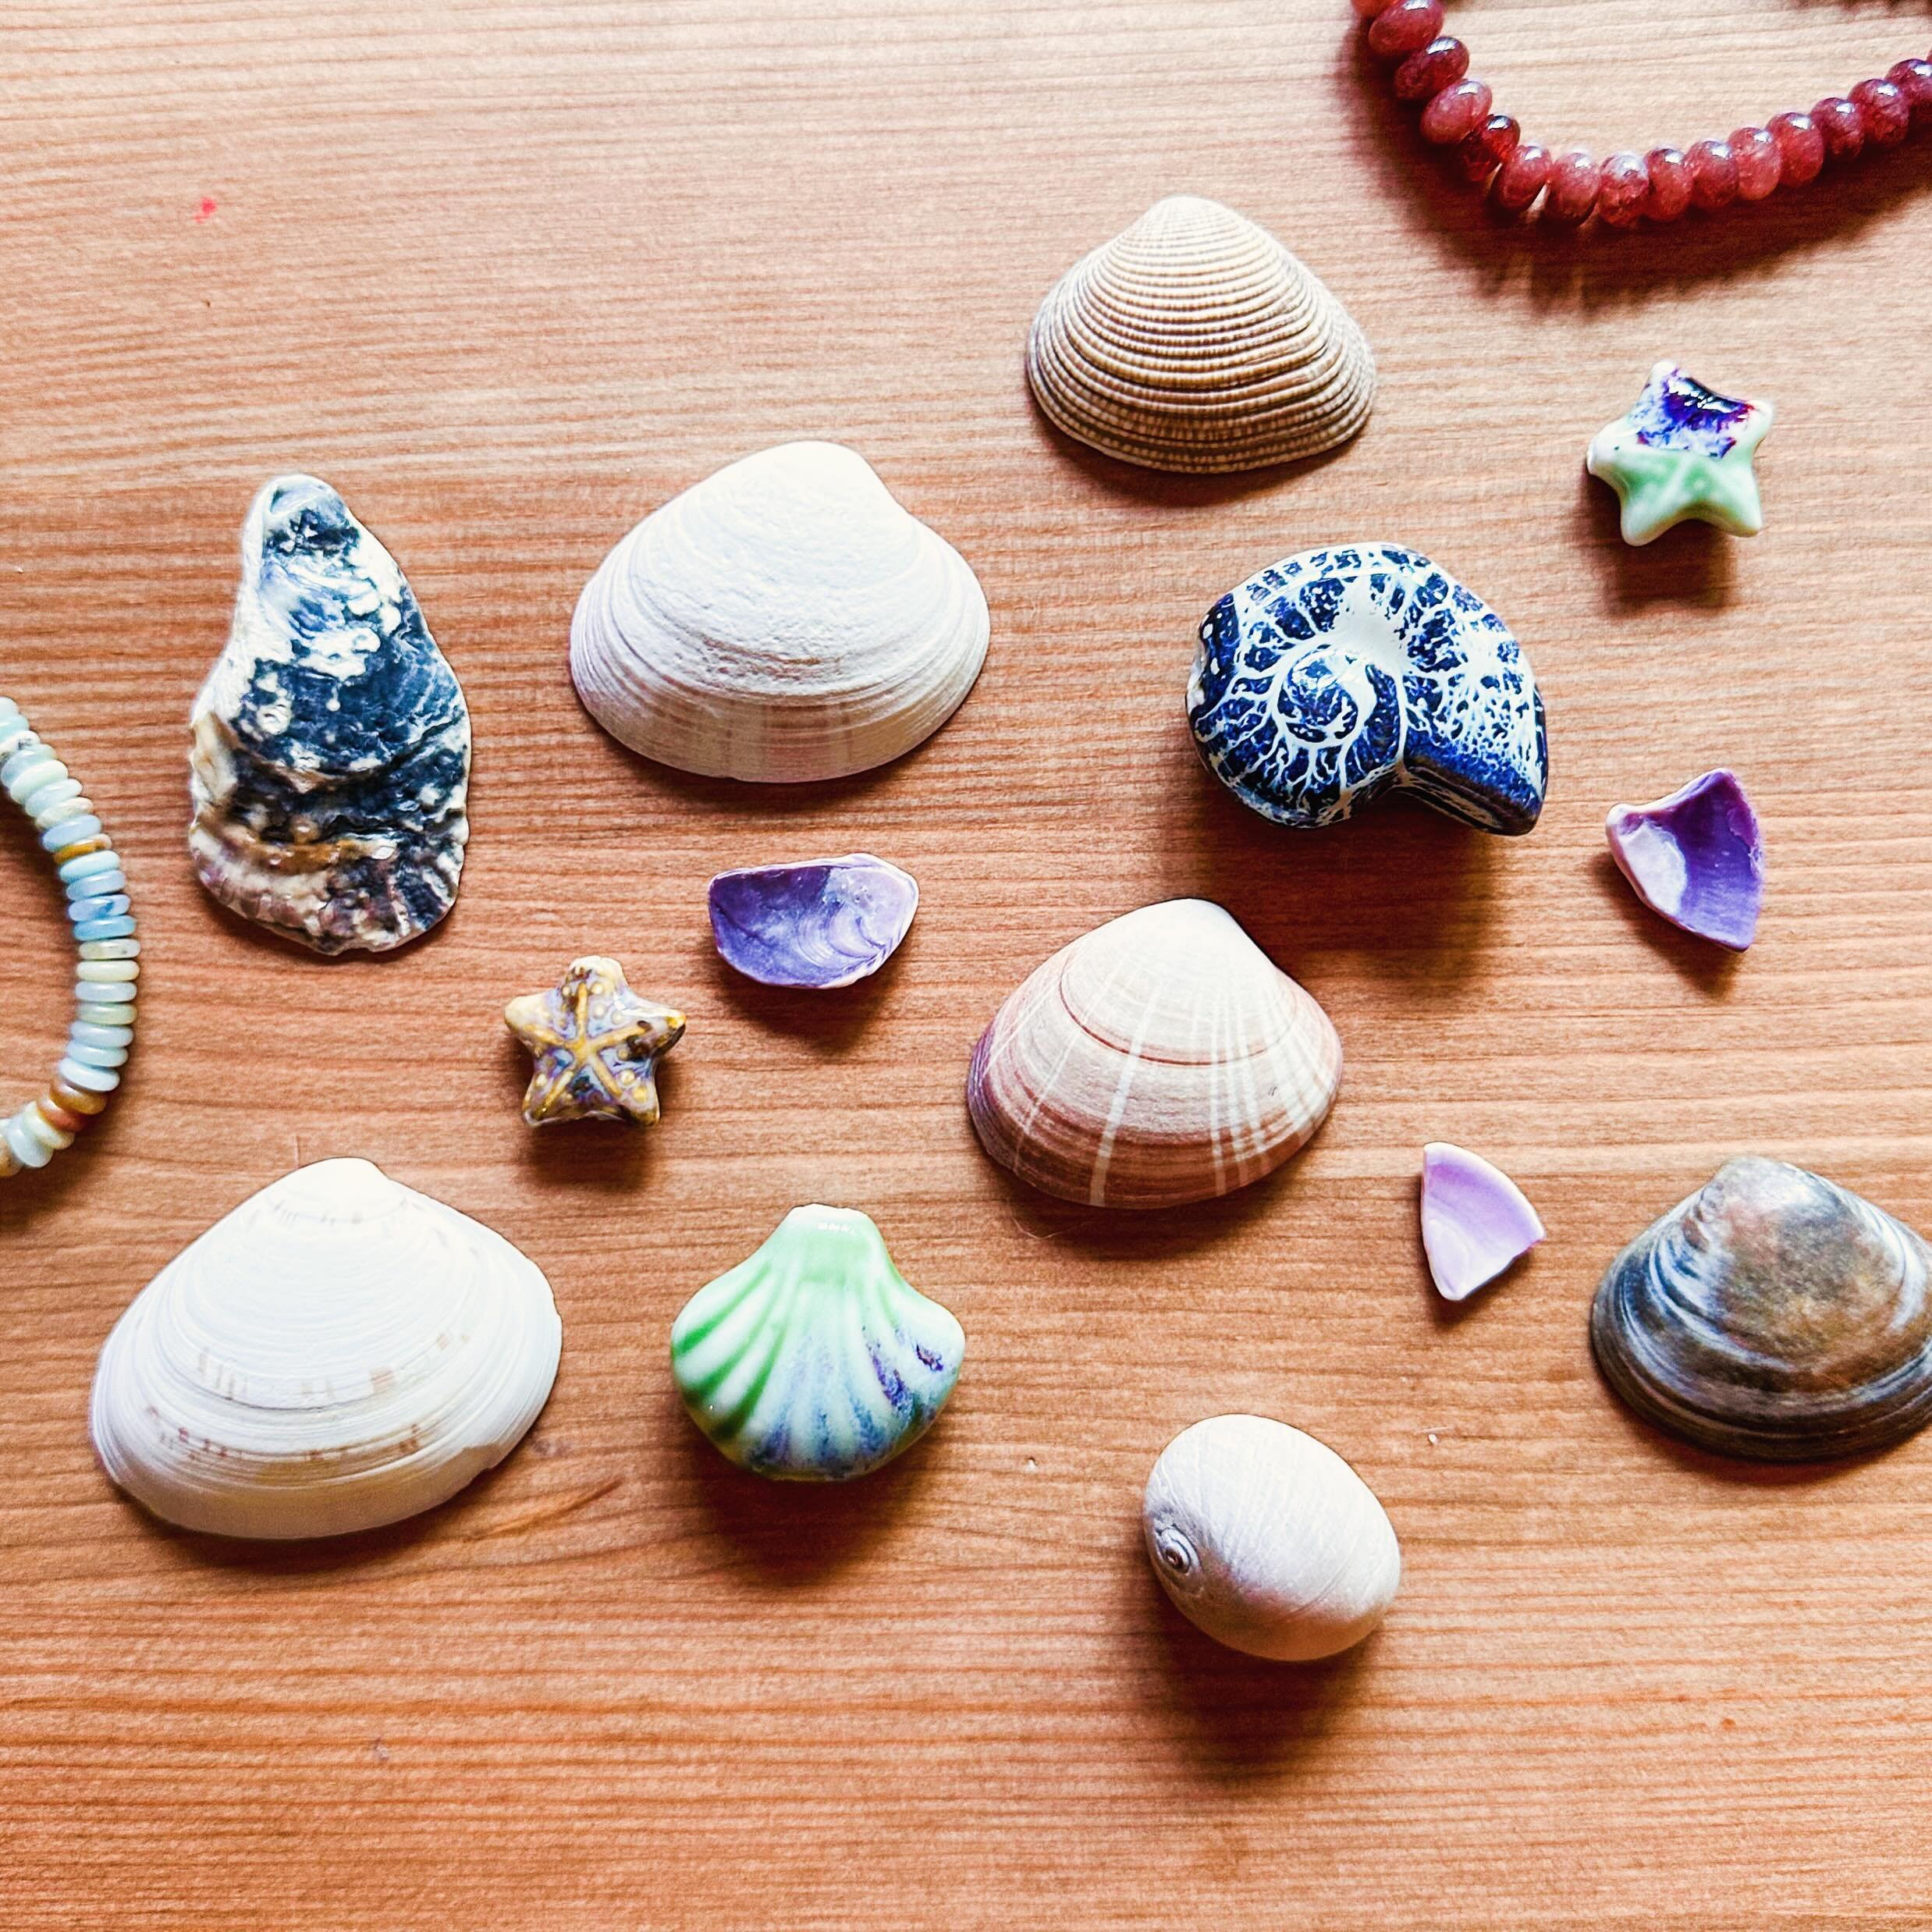 Shells

#shesellsseashells #shelljewelry #shellart #designlife #jewelrydesign #handmadejewelry